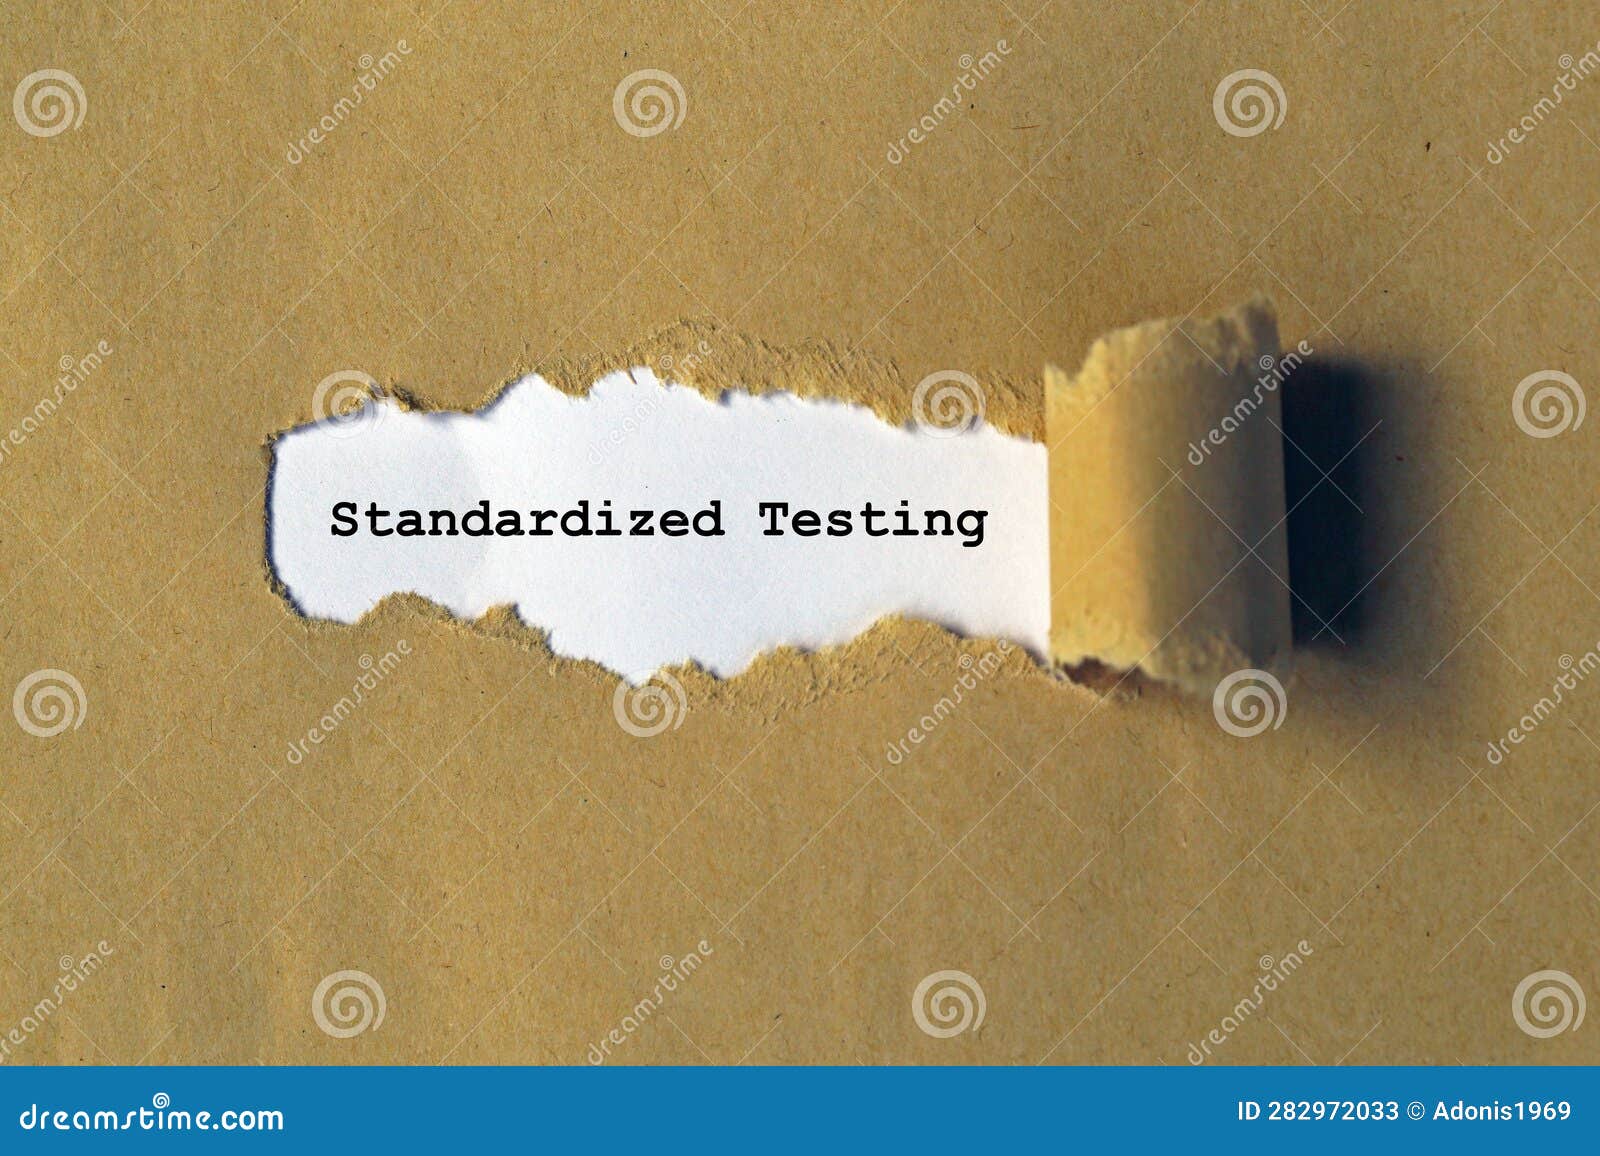 standardized testing on white paper